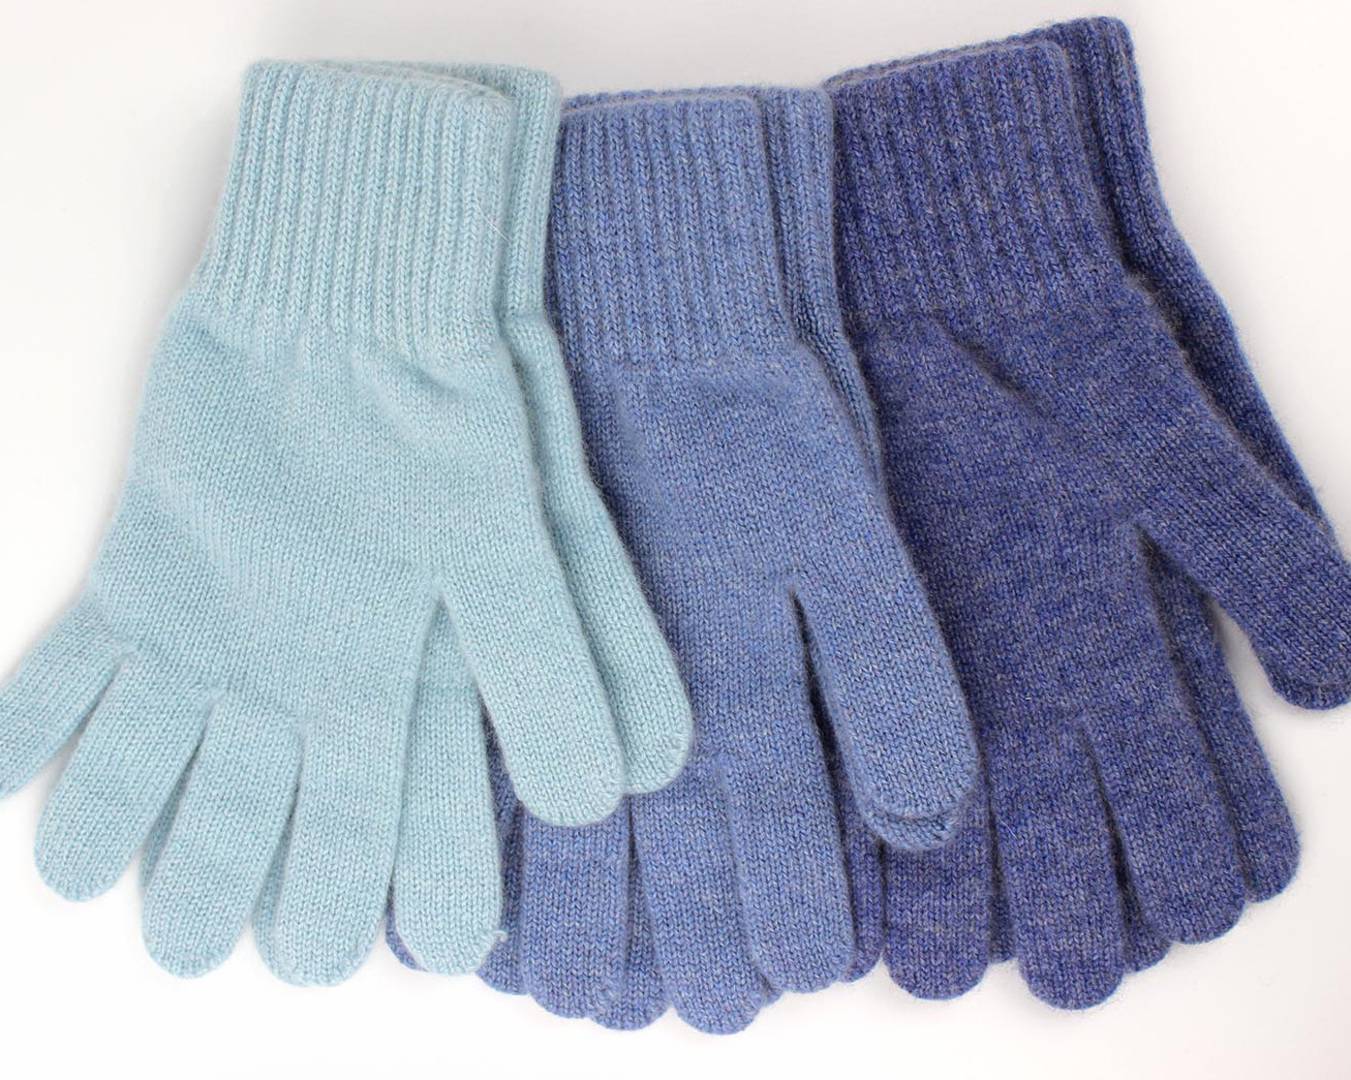 Cashmere gloves in a range of colours,© Scottish Textiles Showcase